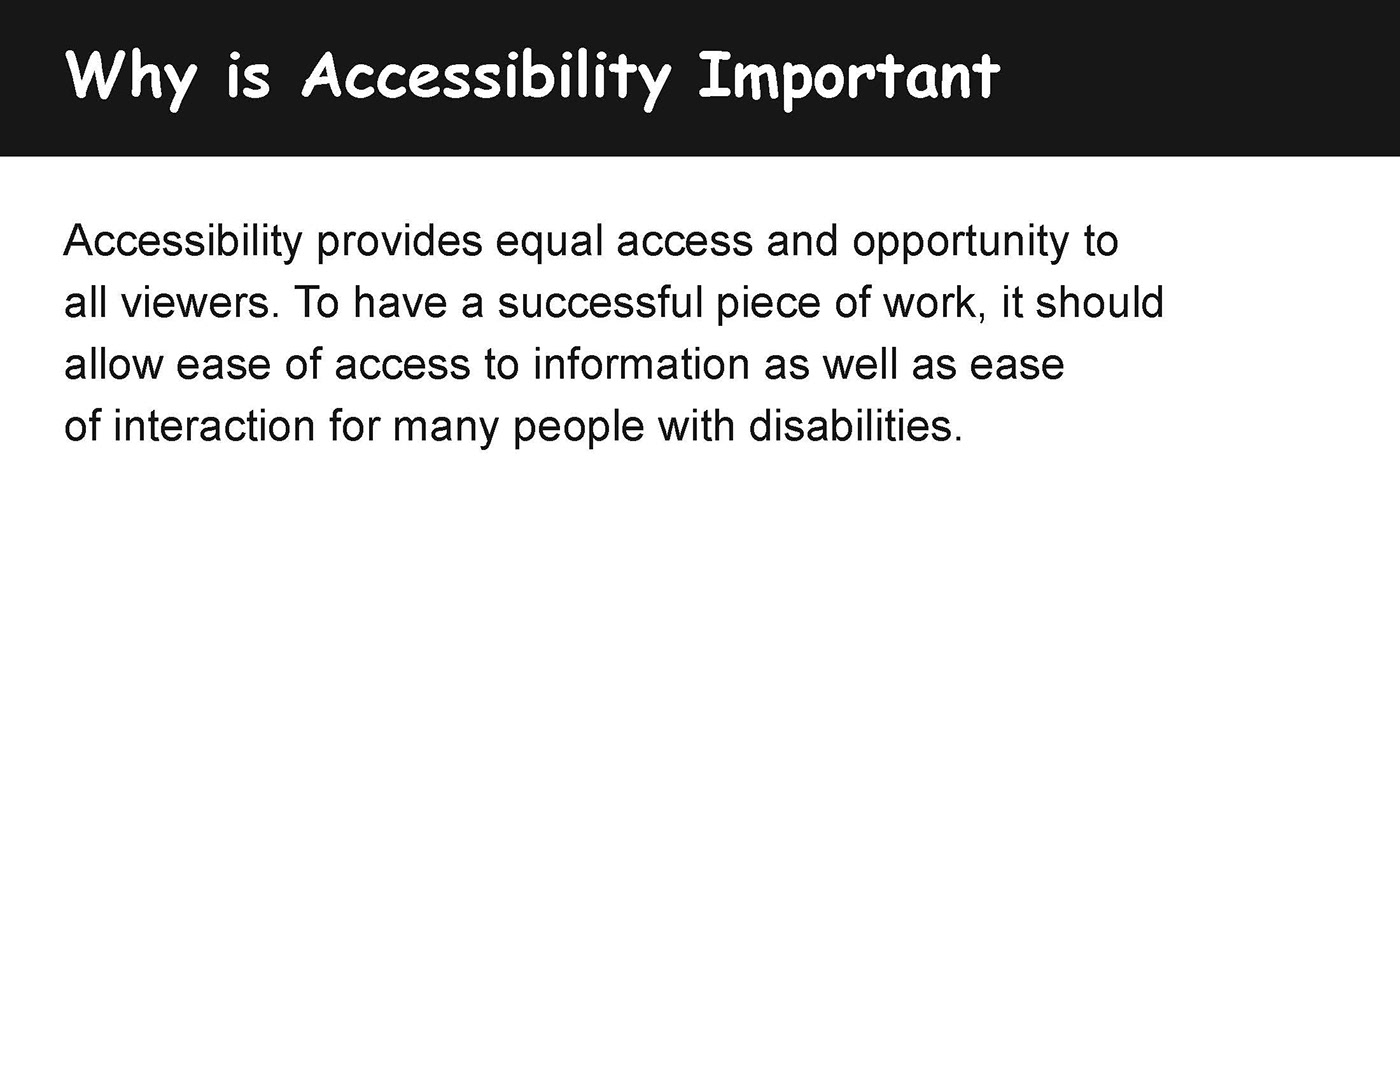 accessible accessible design Comic Sans educate Poster Design visual access visual design